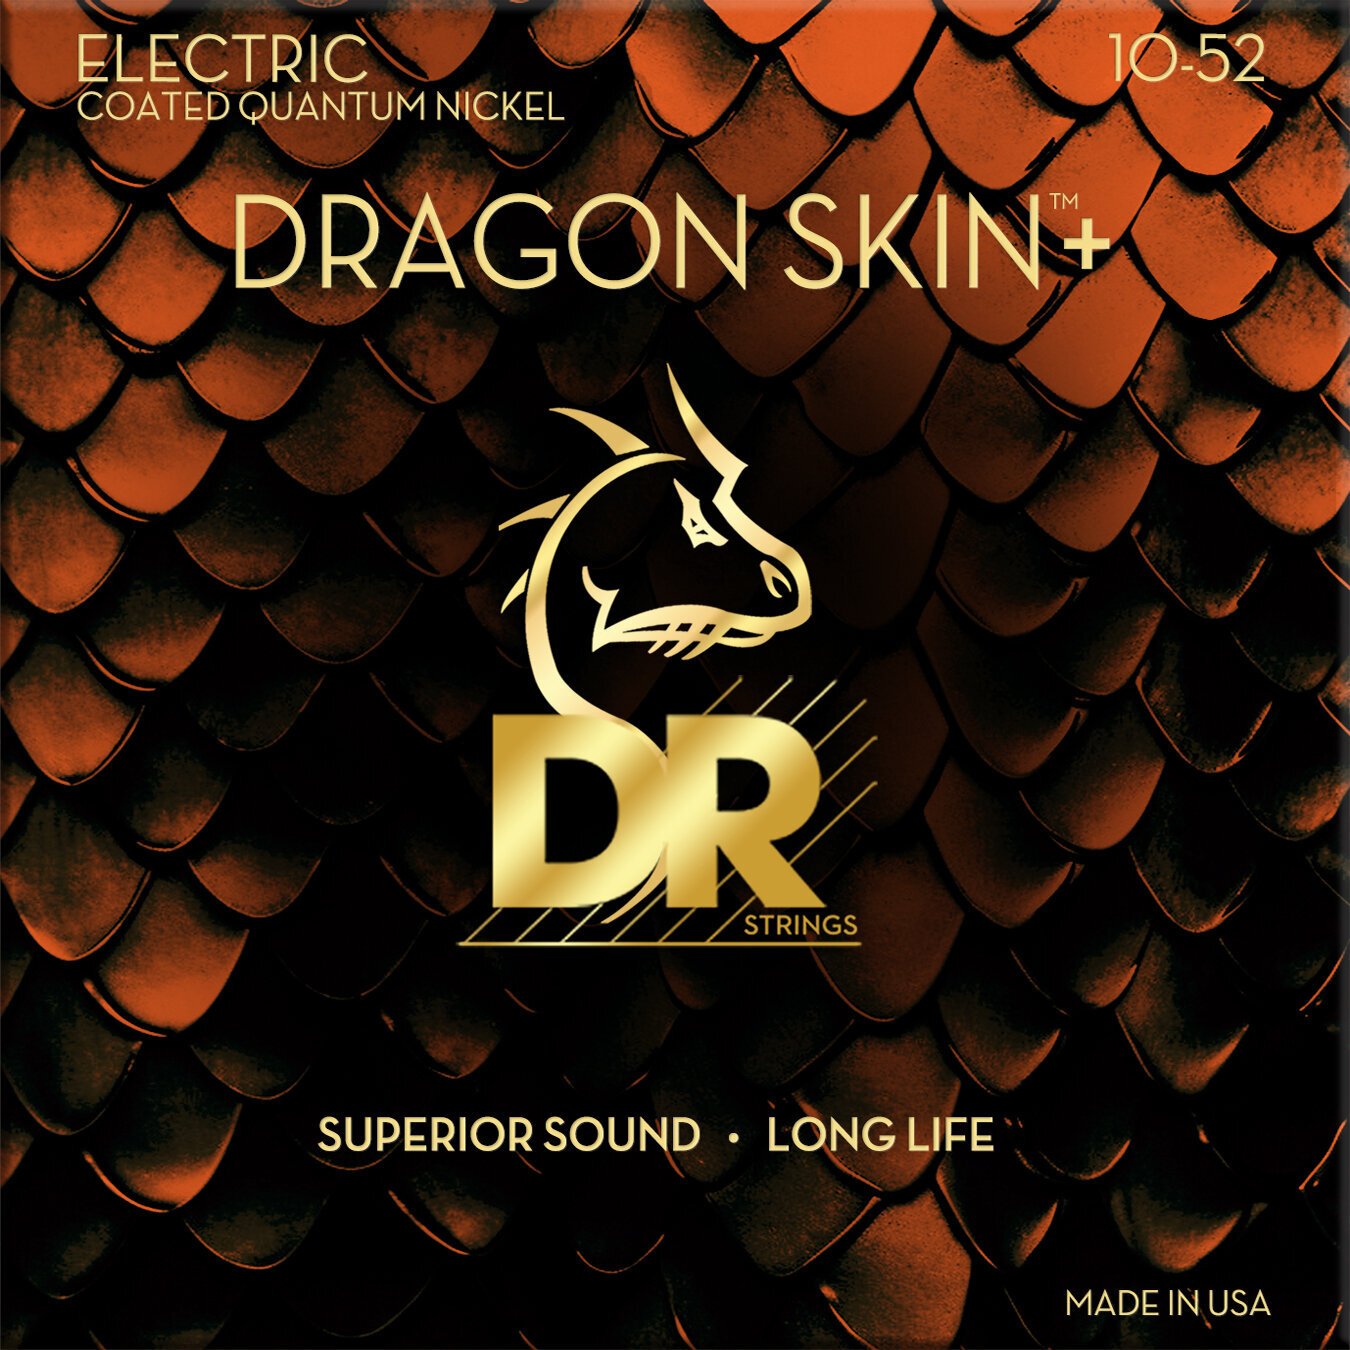 Saiten für E-Gitarre DR Strings Dragon Skin+ Coated Medium to Heavy 10-52